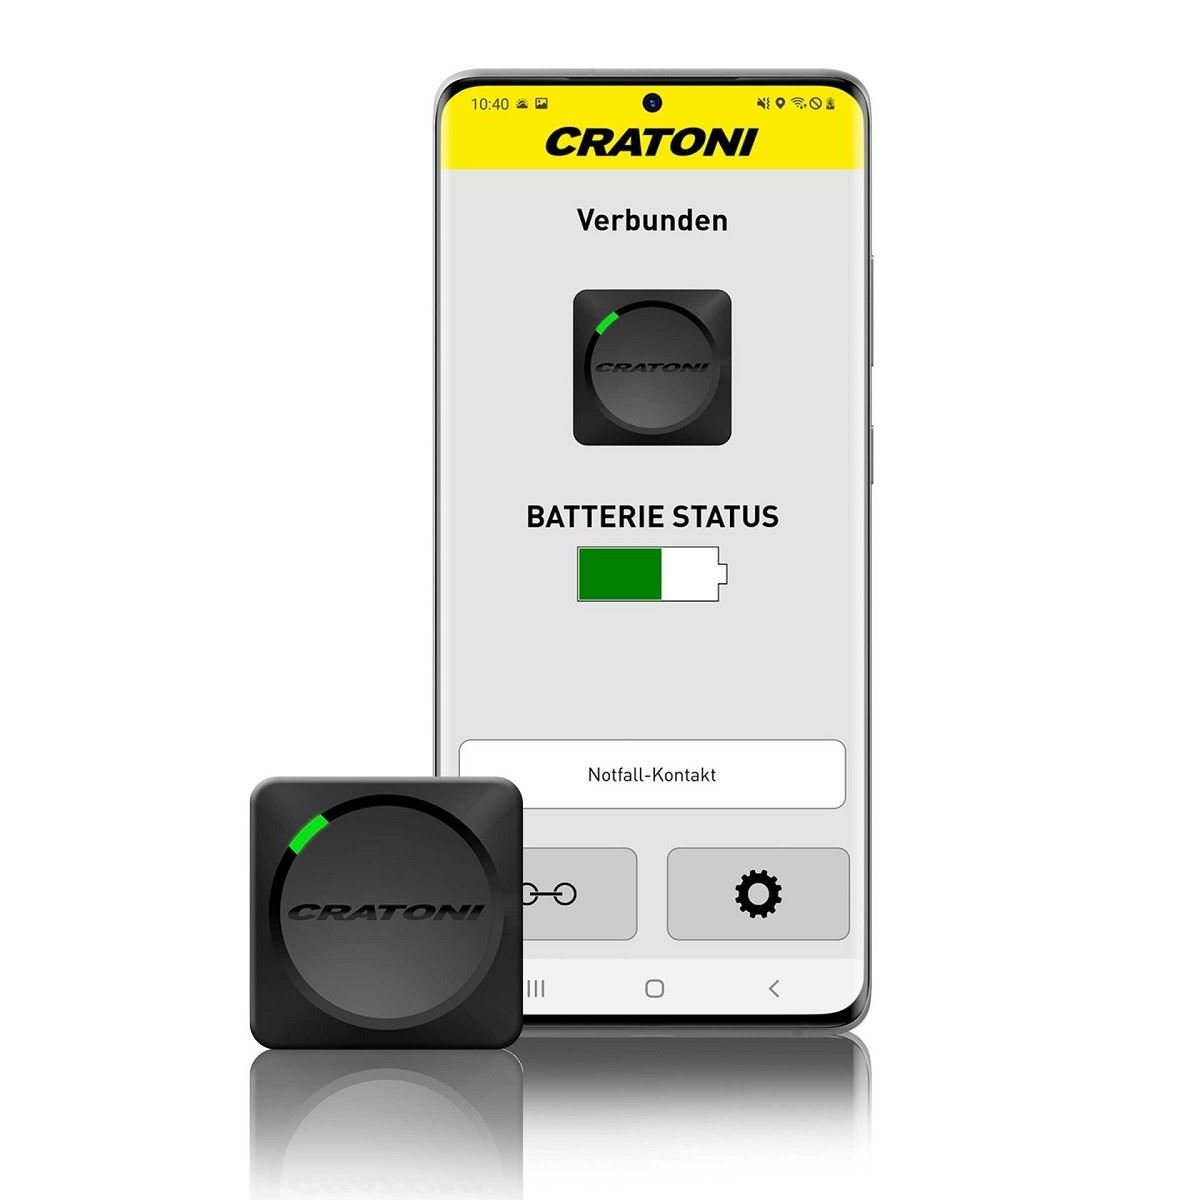 Cratoni C-Safe Crash Sensor 230801G5 Sturzerkennung Notruf App Biken Reiten Ski 